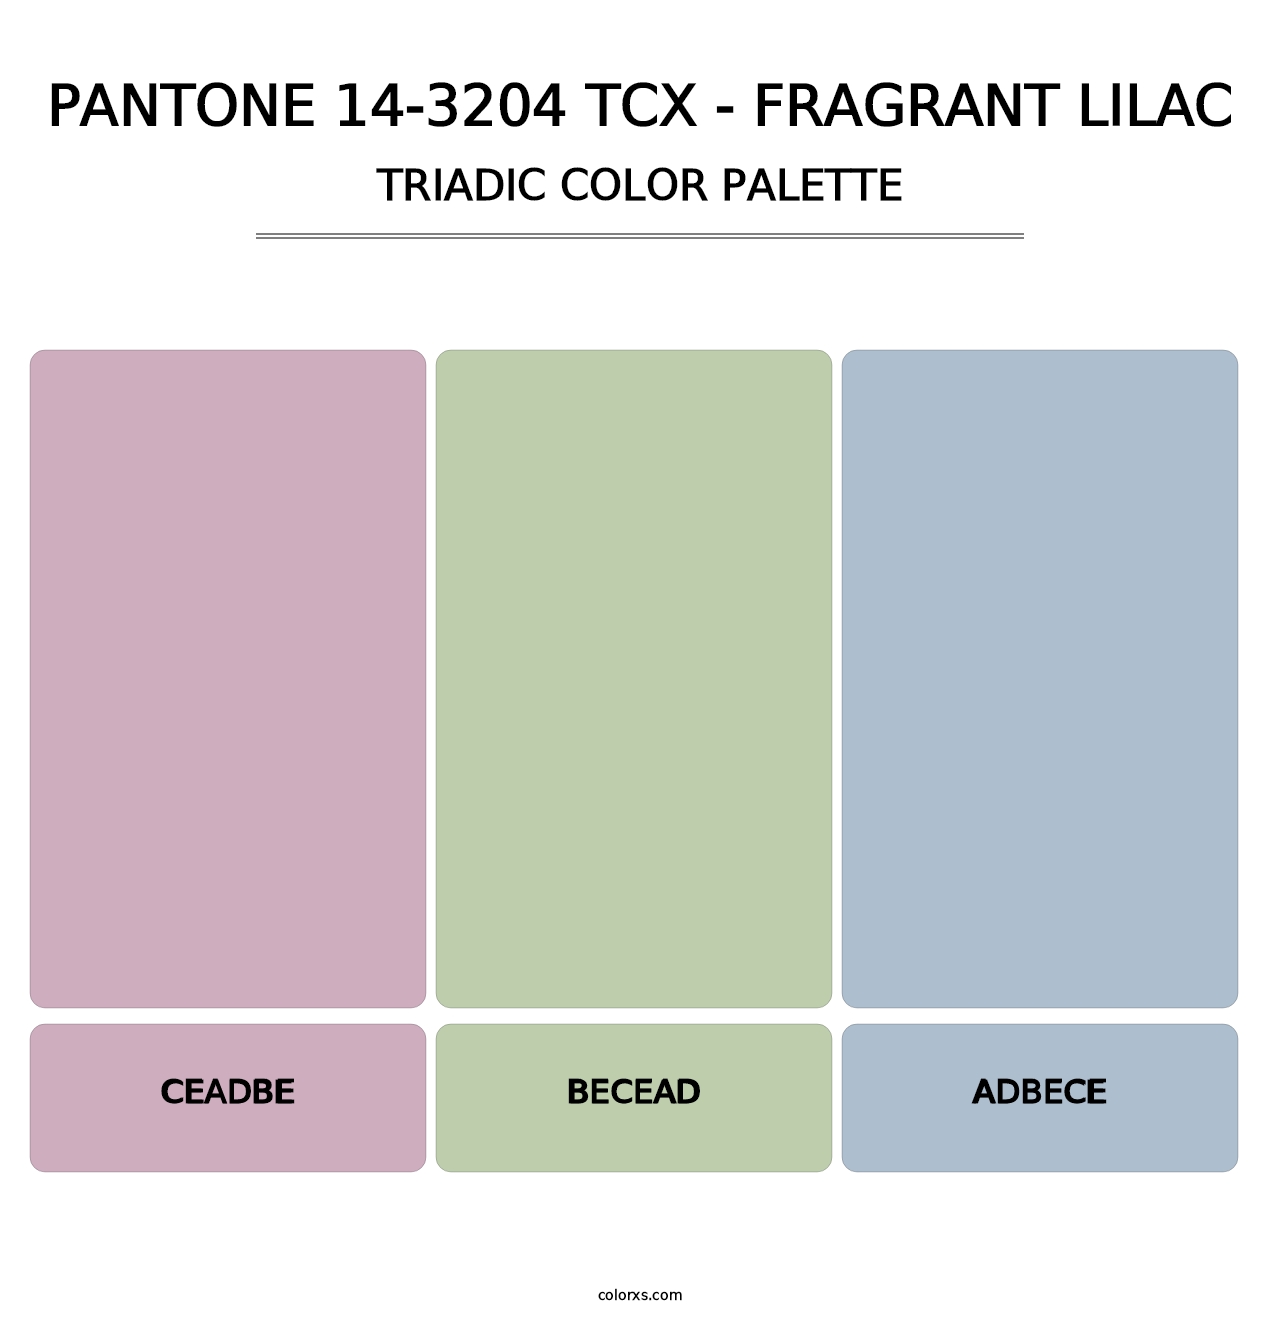 PANTONE 14-3204 TCX - Fragrant Lilac - Triadic Color Palette